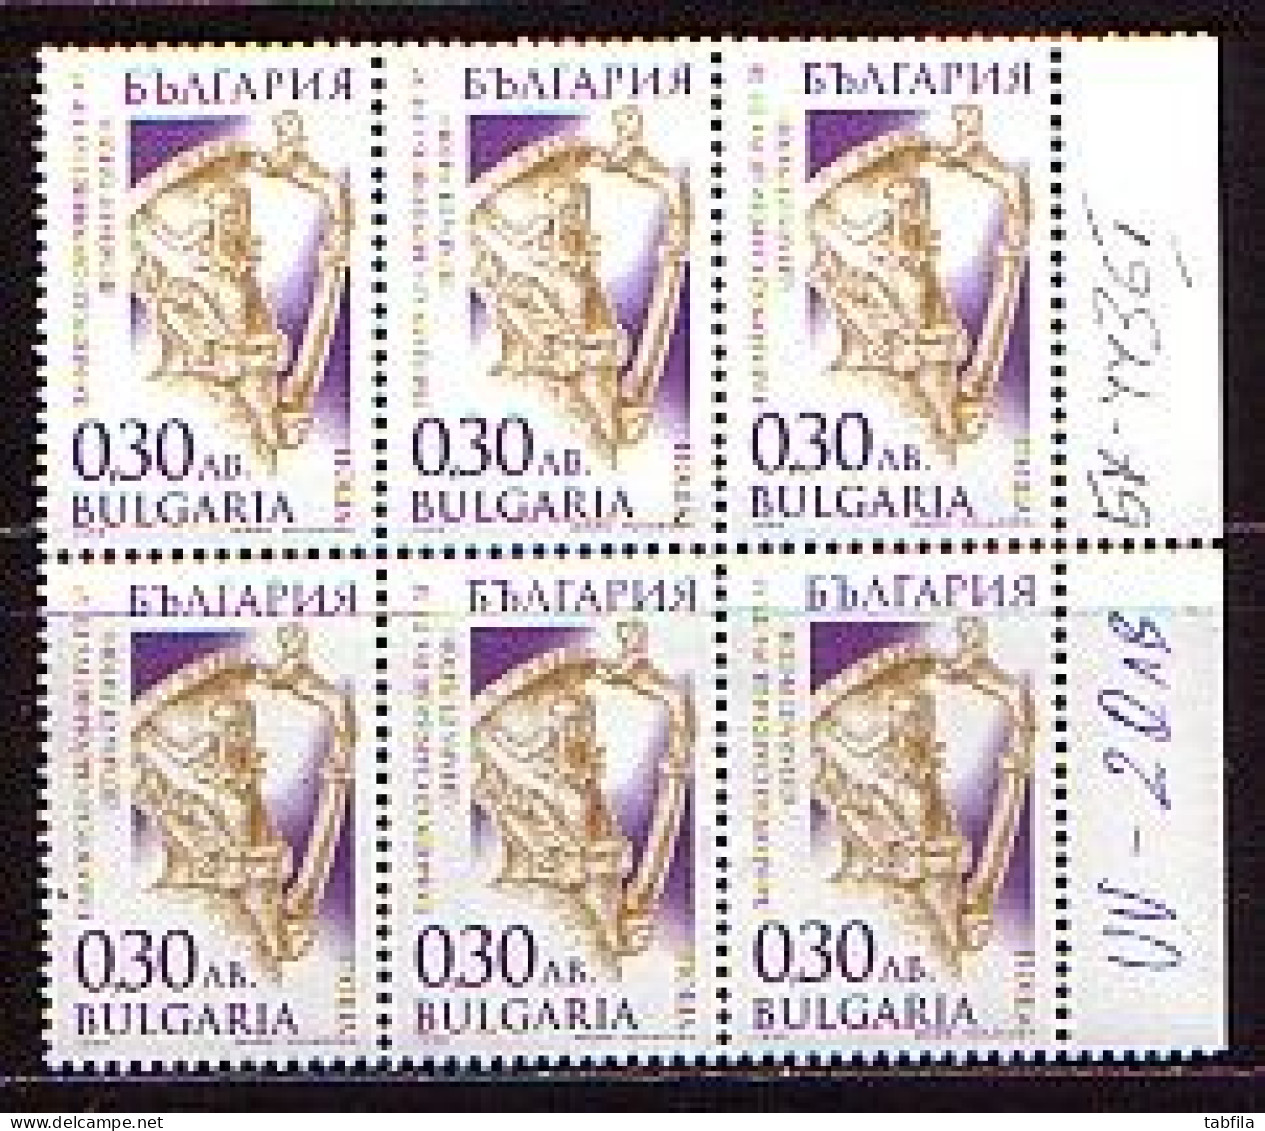 BULGARIA - 1999 - Thracian Gold Treasure -PF De 6 St. BGN 0.30 X 6 MNH - Paper With UV - Rarity - Errors, Freaks & Oddities (EFO)